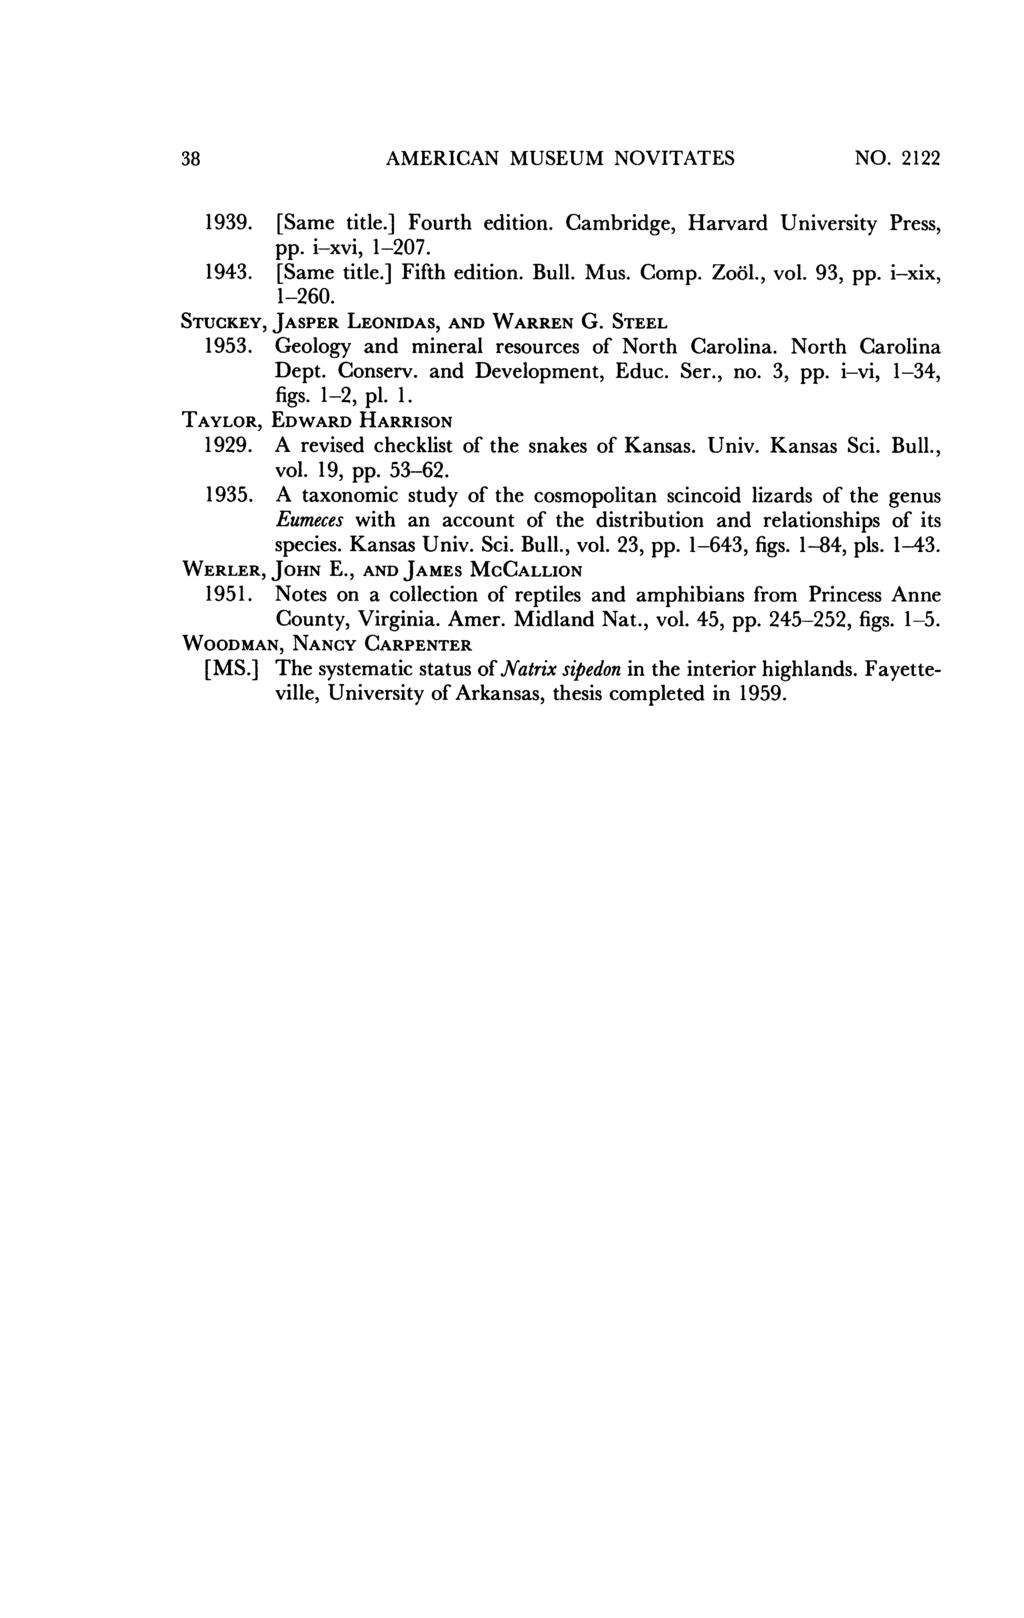 38 AMERICAN MUSEUM NOVITATES NO. 2122 1939. [Same title.] Fourth edition. Cambridge, Harvard University Press, pp. i-xvi, 1-207. 1943. [Same title.] Fifth edition. Bull. Mus. Comp. Zo6l., vol. 93, pp.